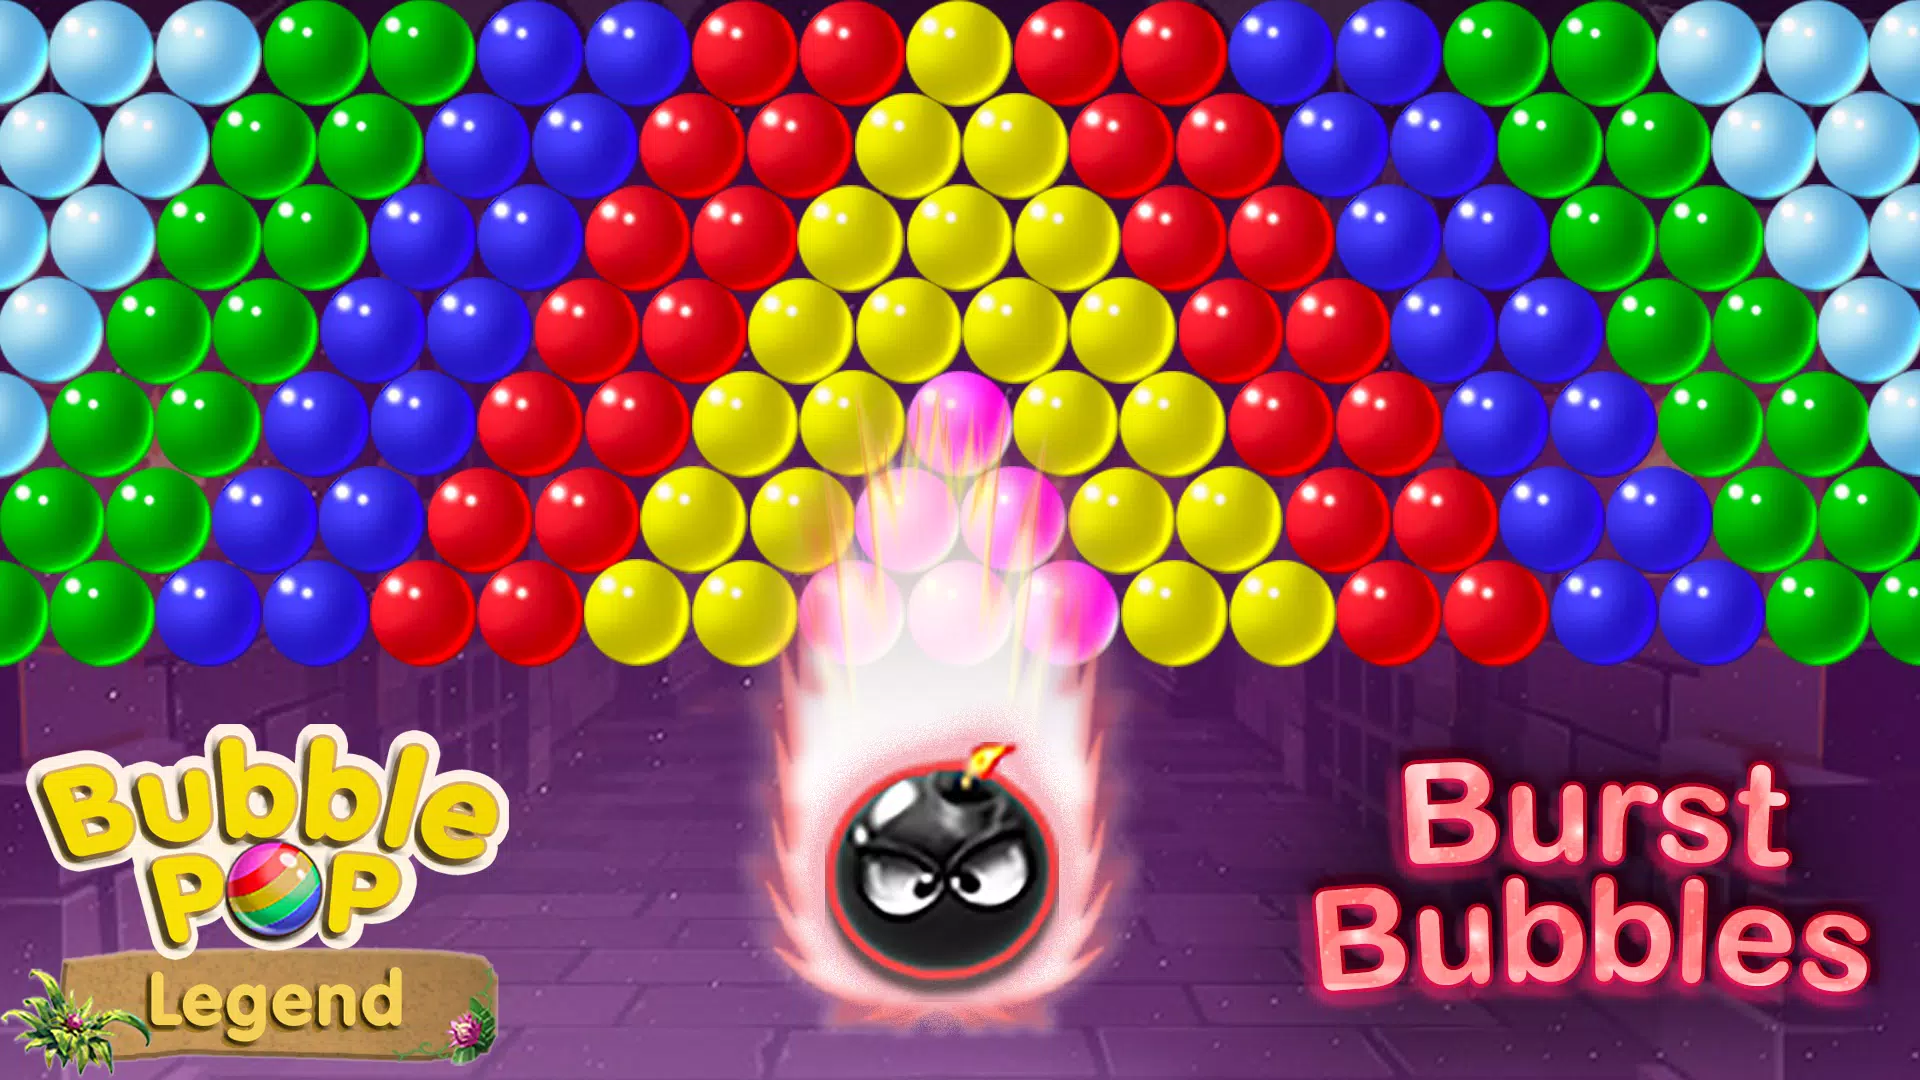 Bubble Shooter - Ilyon Games